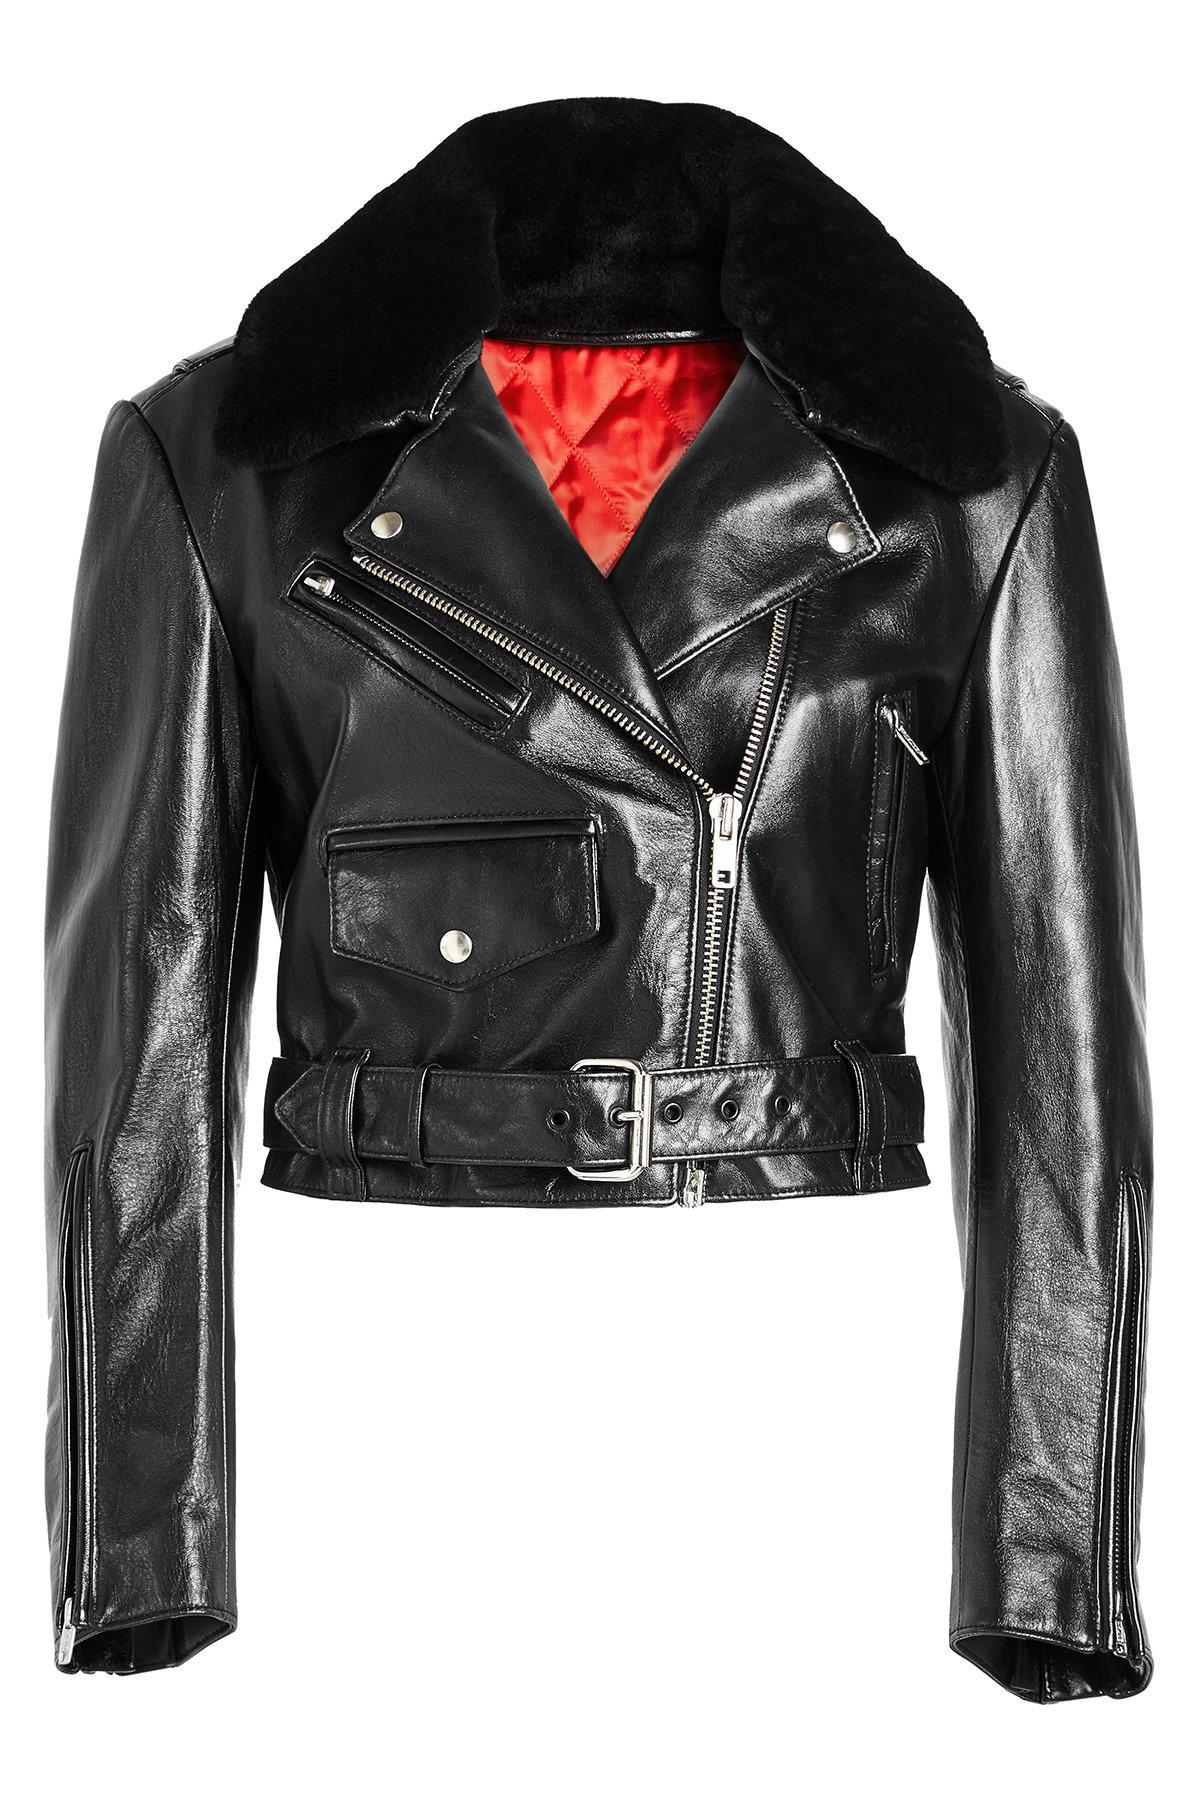 calvin klein 205w39nyc leather jacket